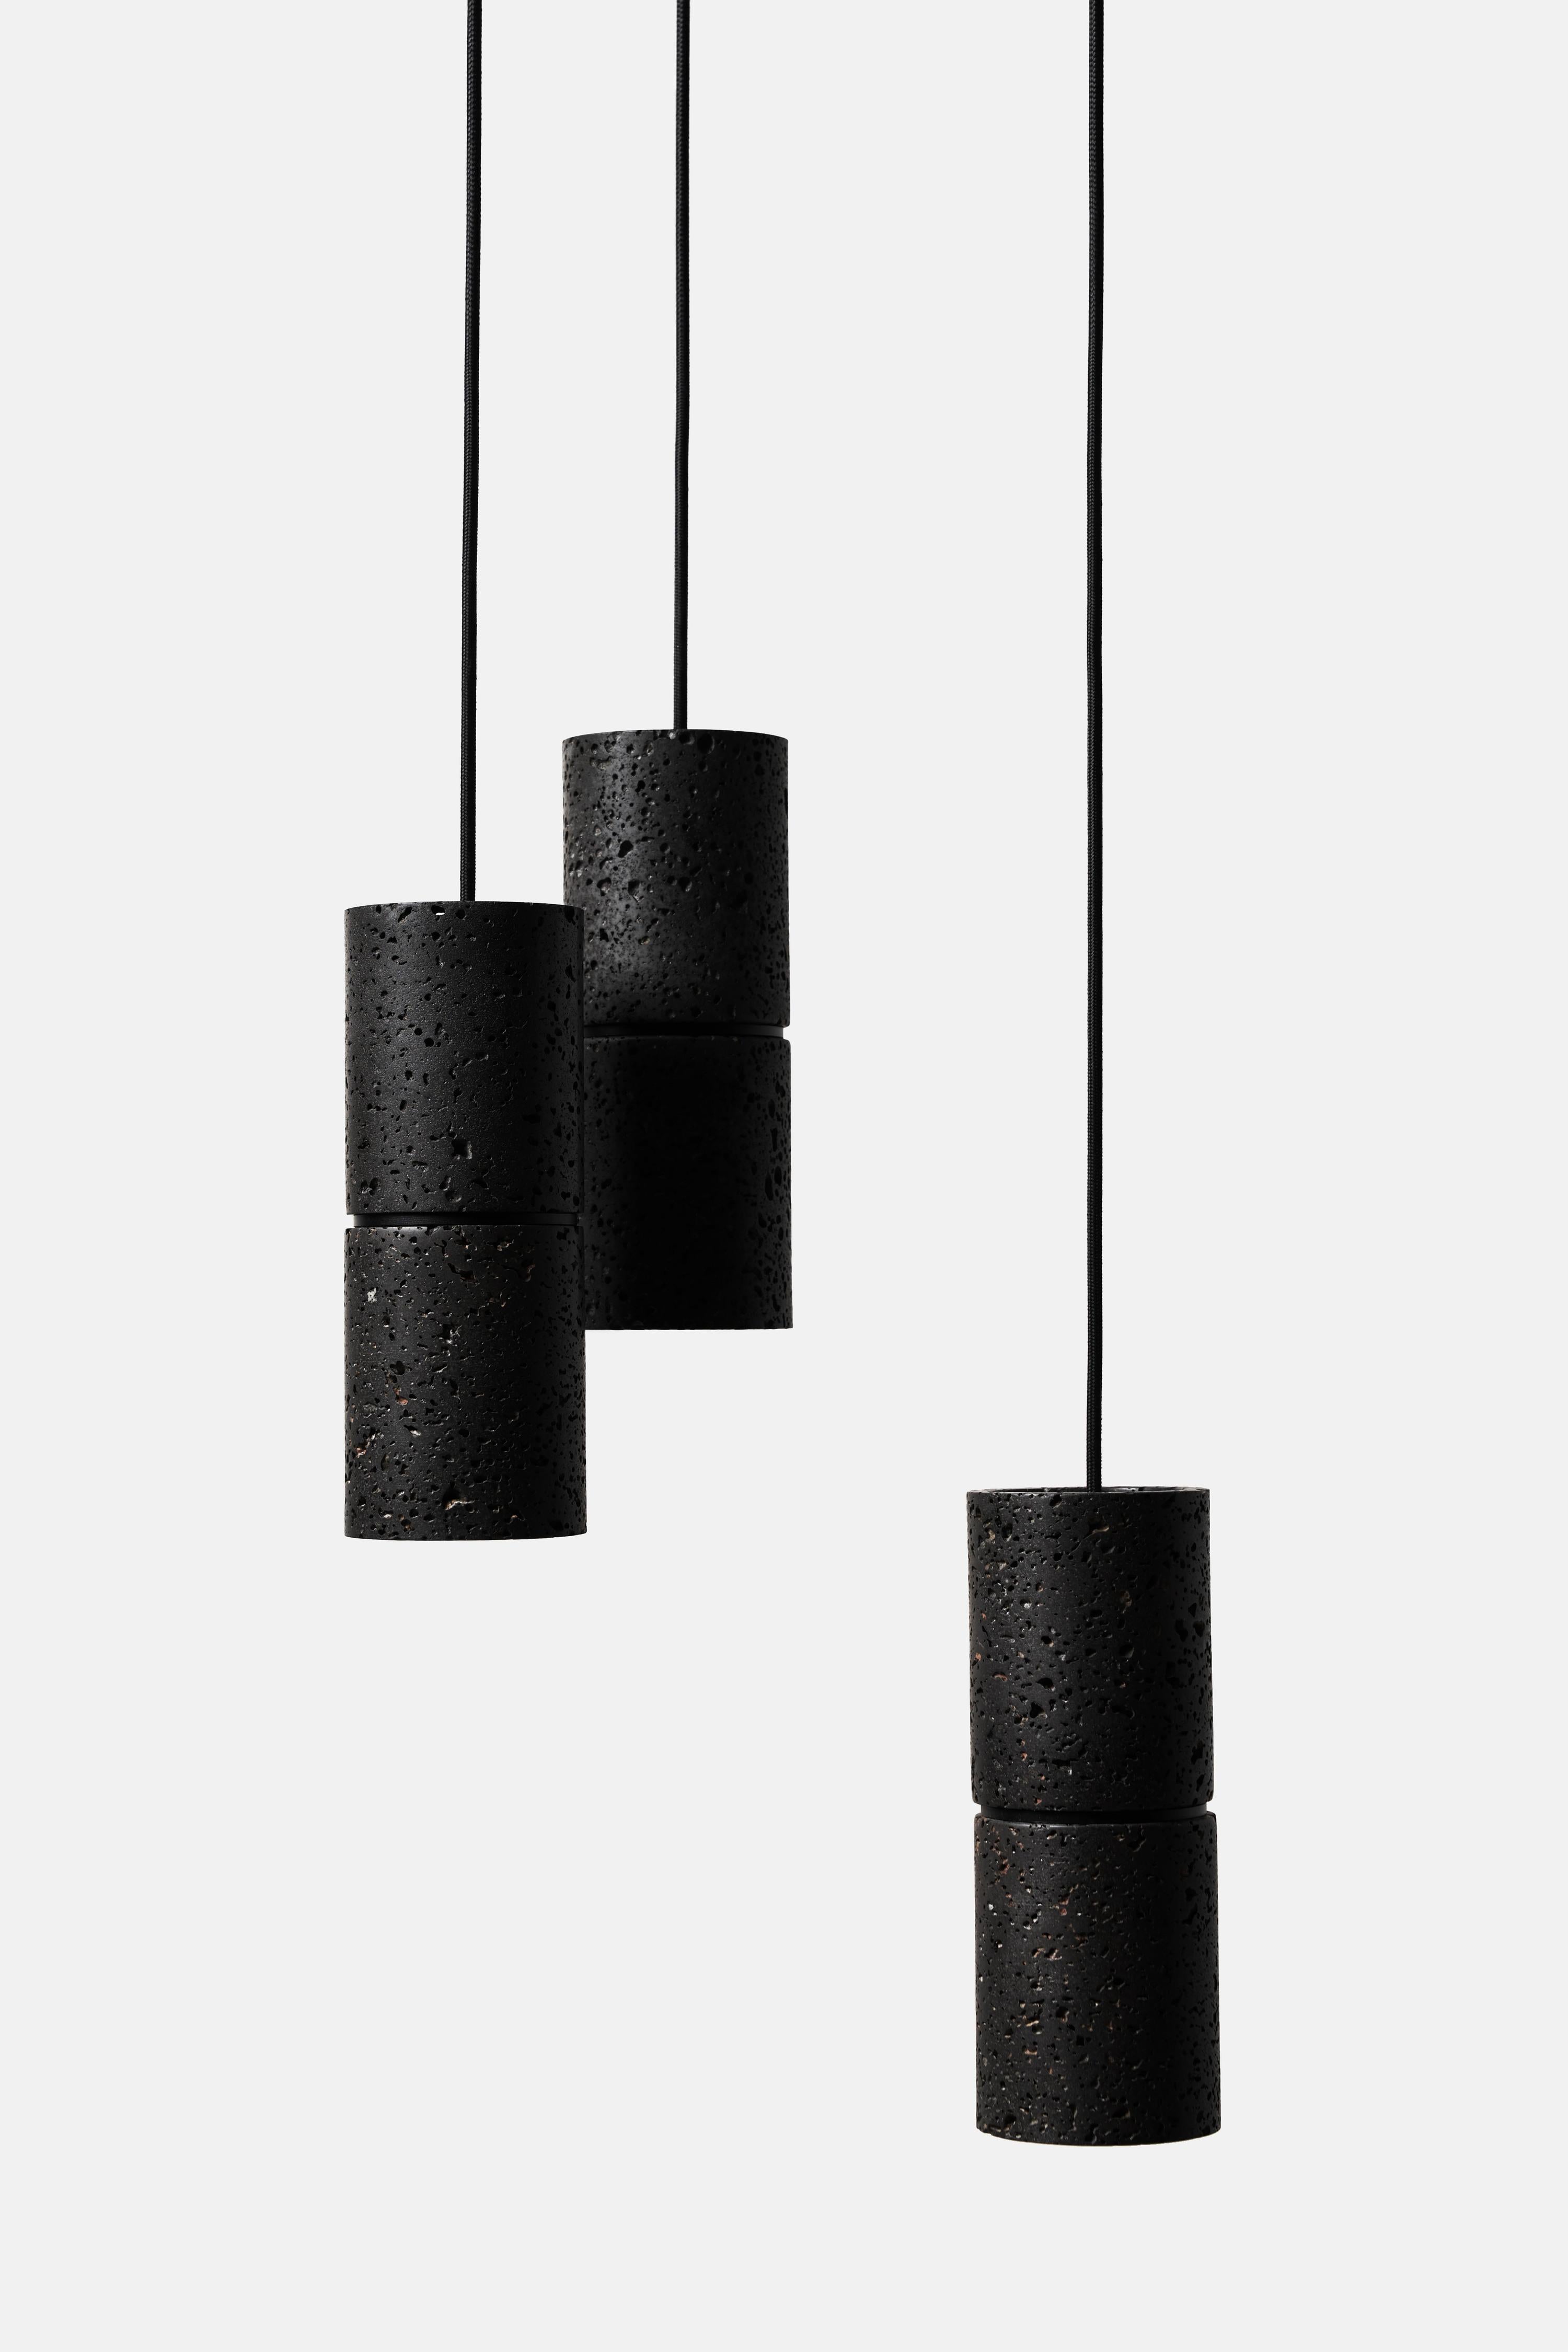 Chinese Contemporary Pendant Lamp 'RI' in Black Lava Stone 'Brass Finish' For Sale